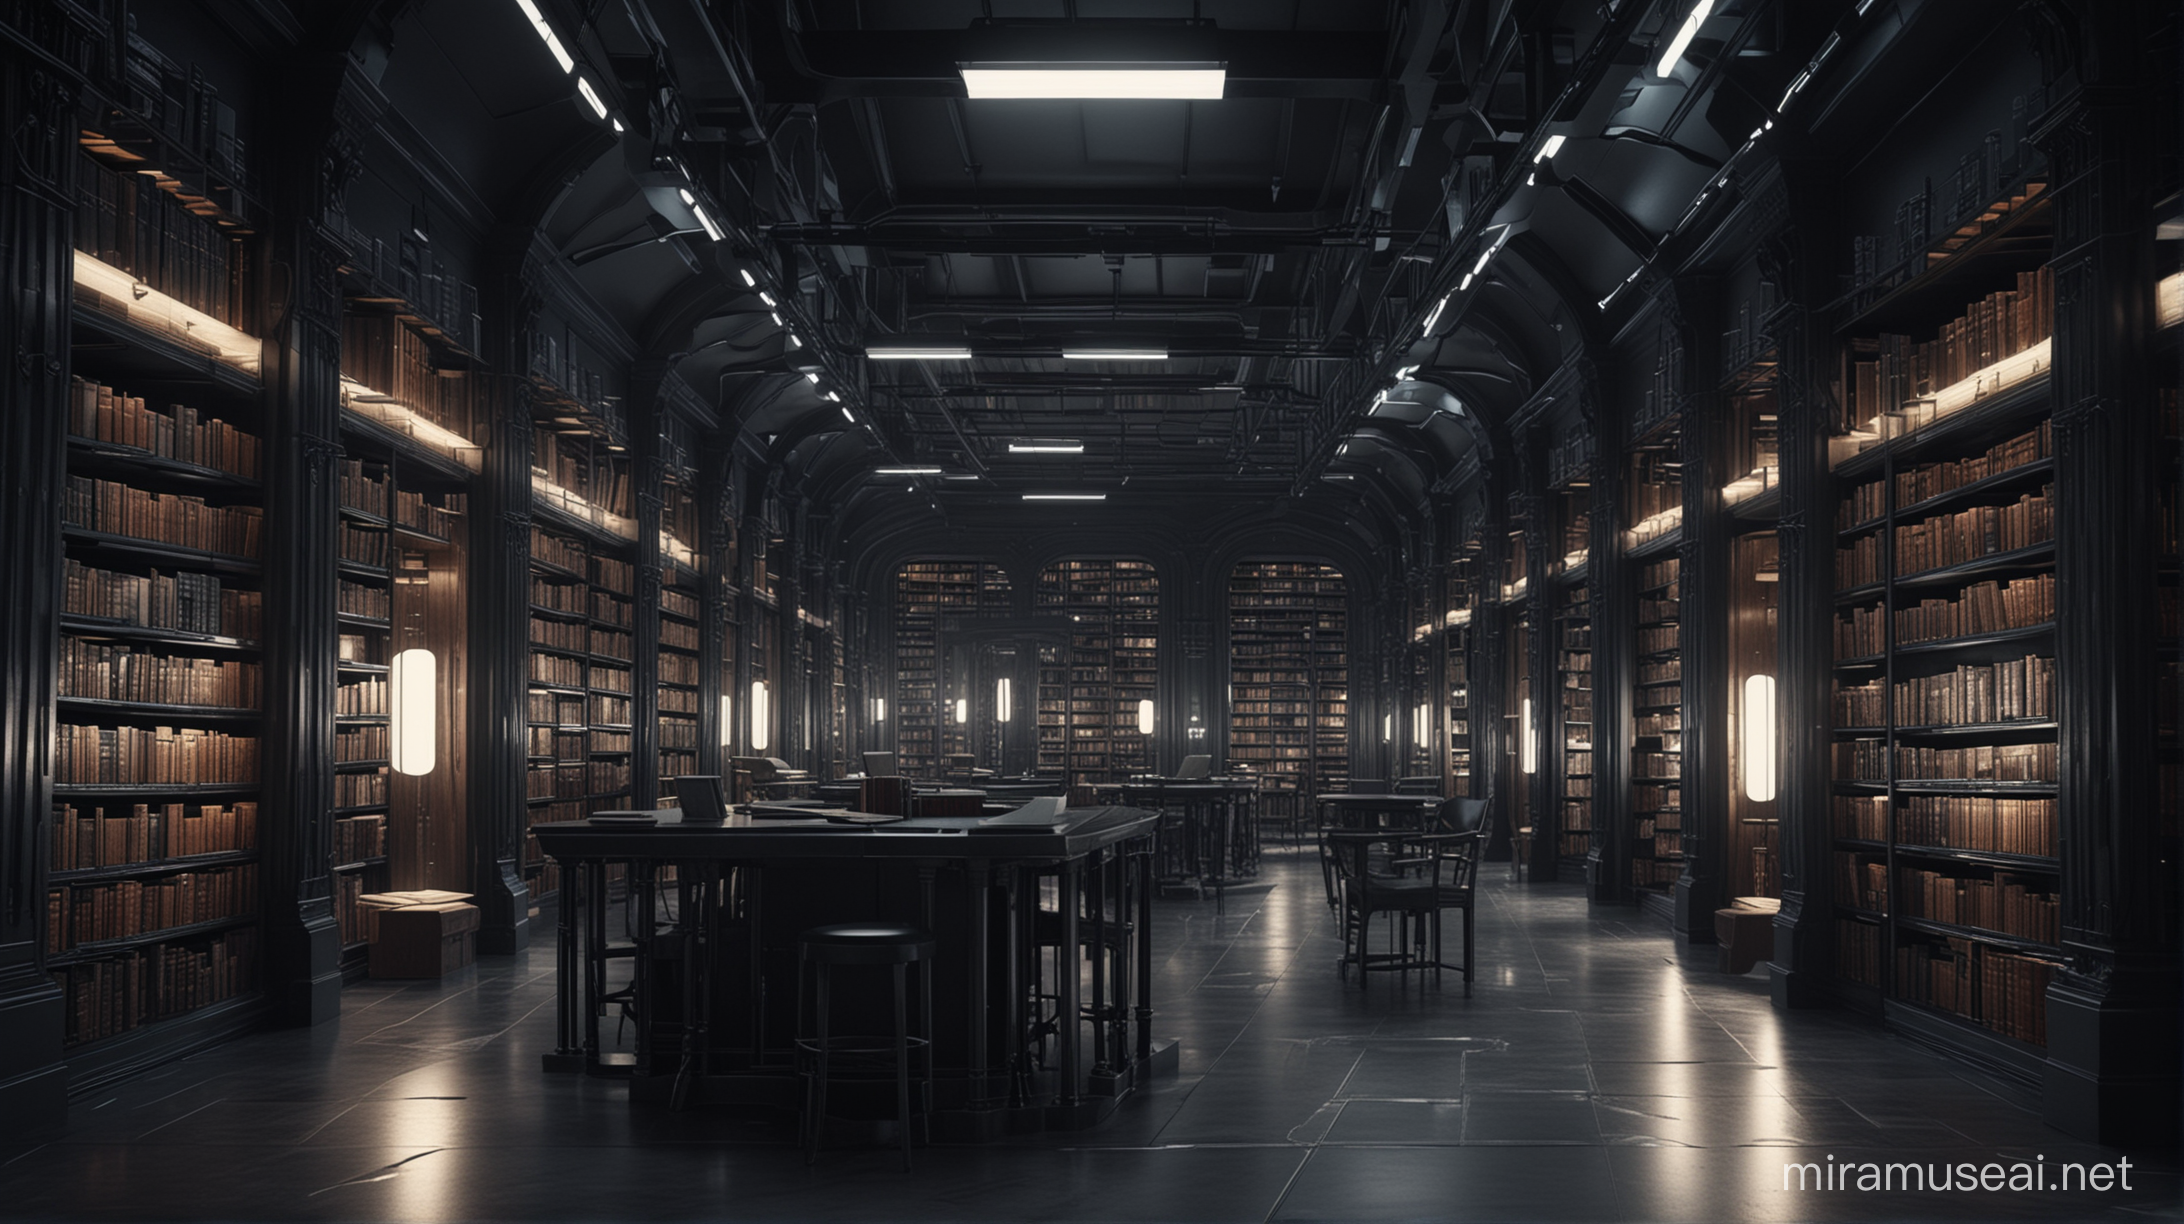 Please create a dark futuristic style image of a library. Photorealistic 4K image 